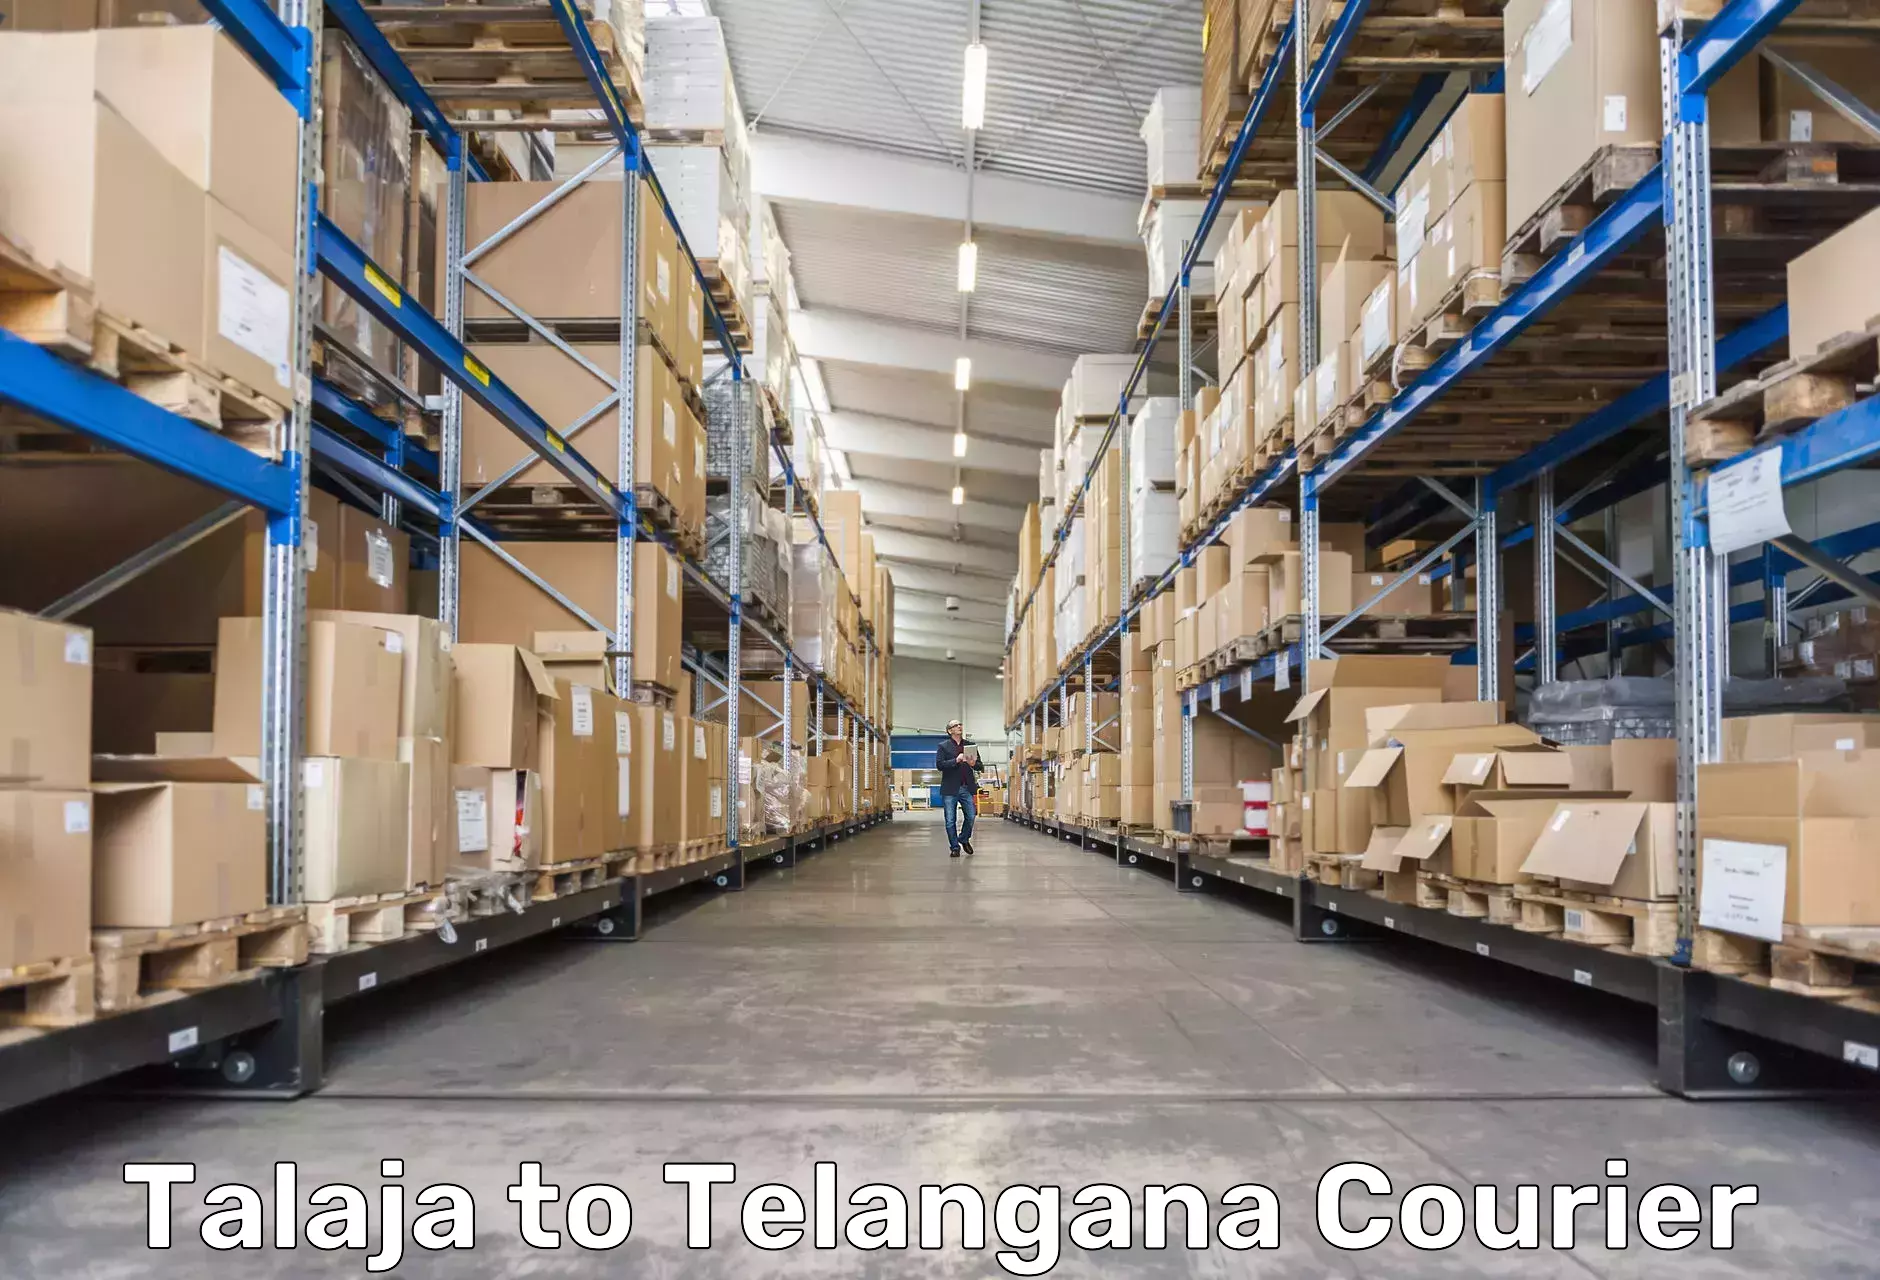 Courier service comparison Talaja to Kothakota